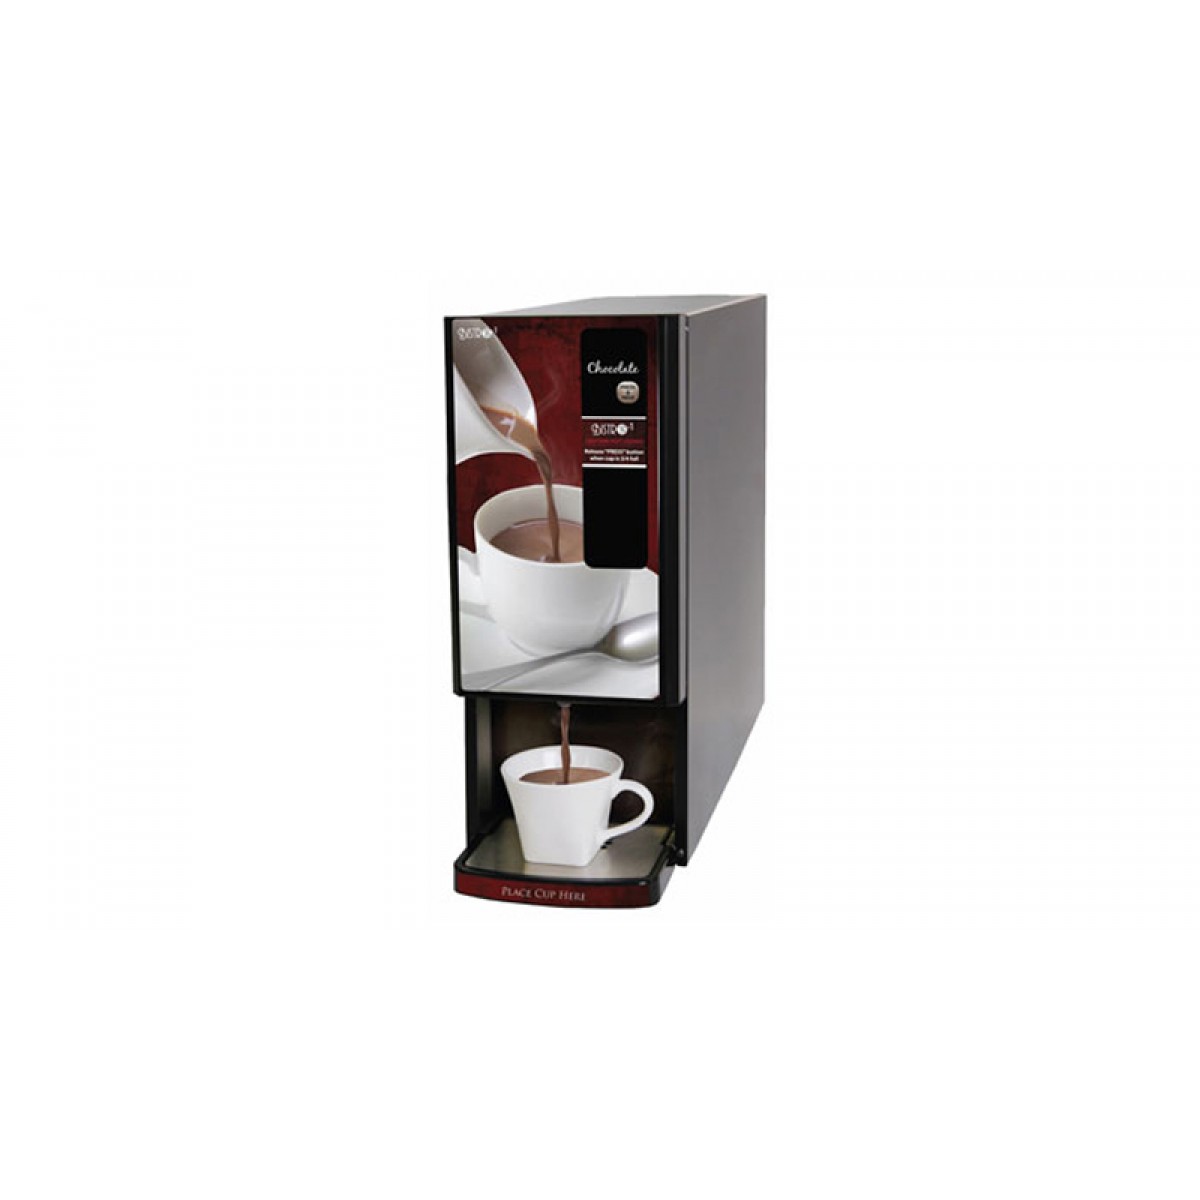 Bistro Touch Large Capacity  Newco Liquid Coffee Machine